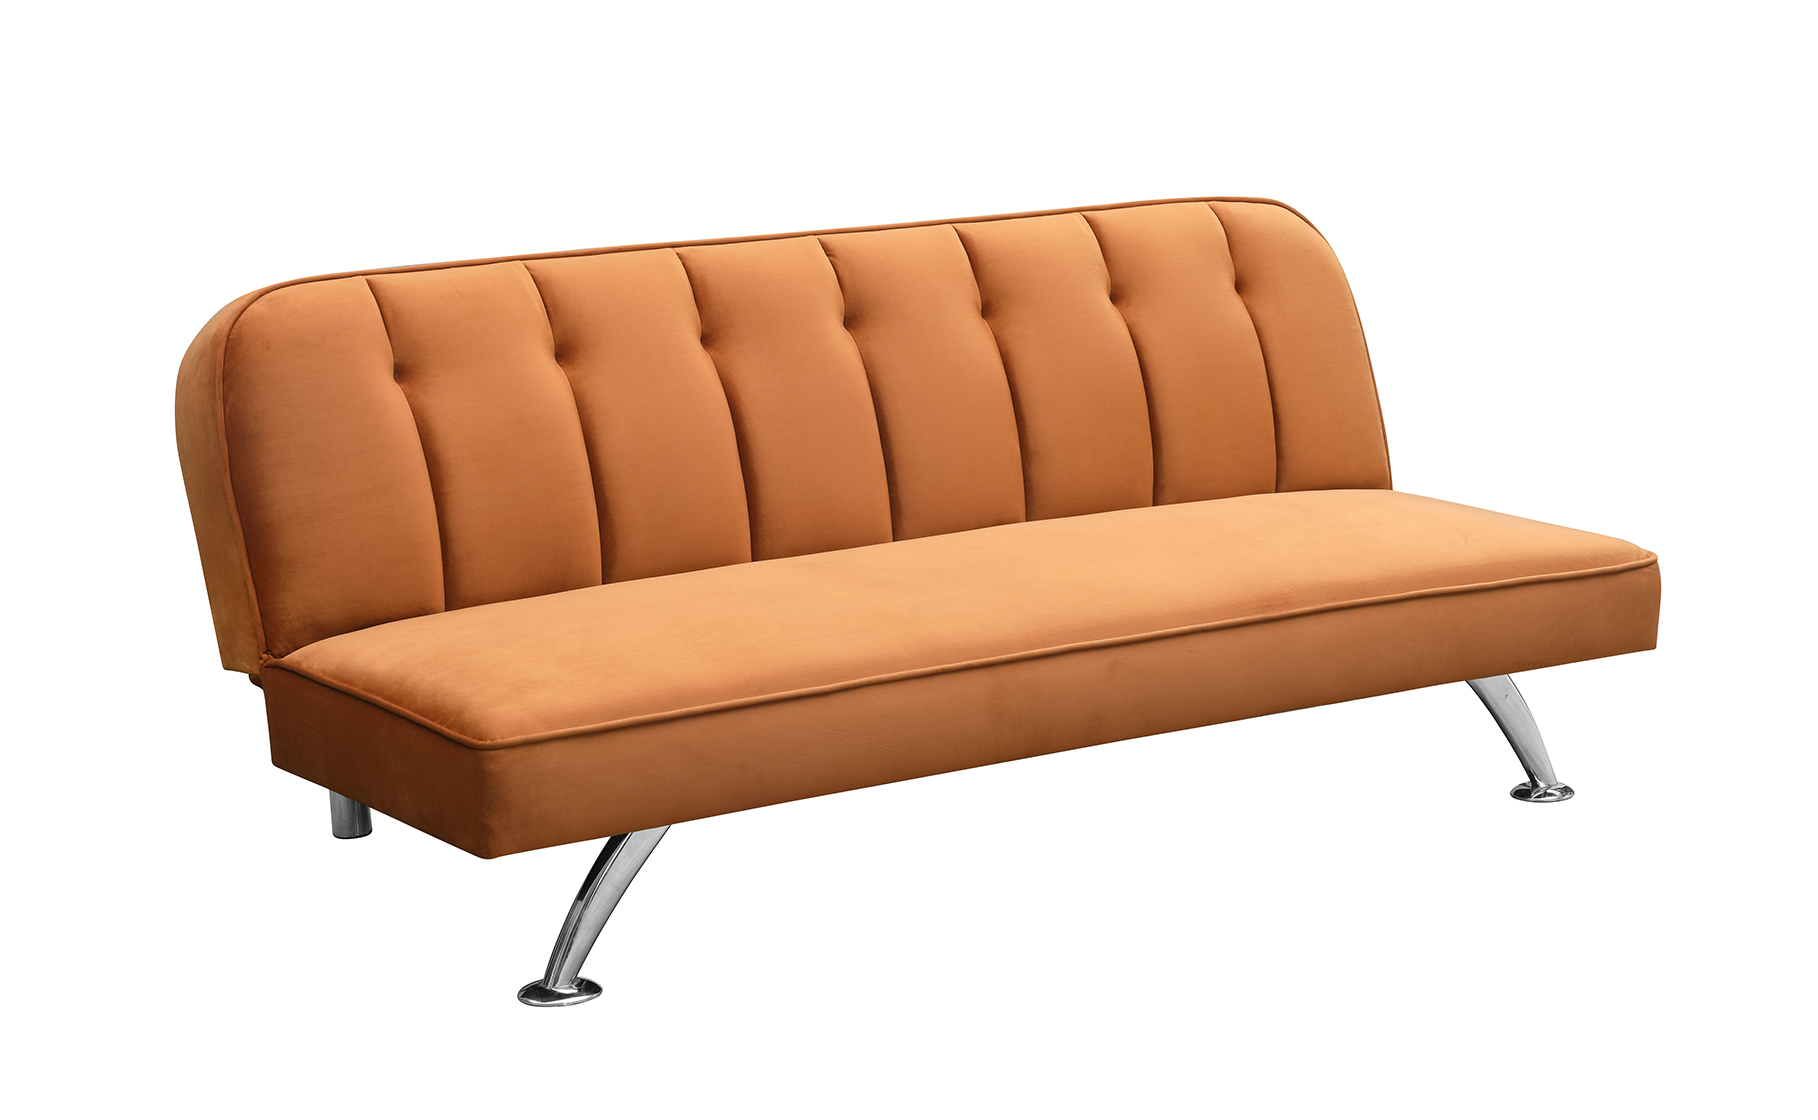 Brewin Sofa Bed Orange